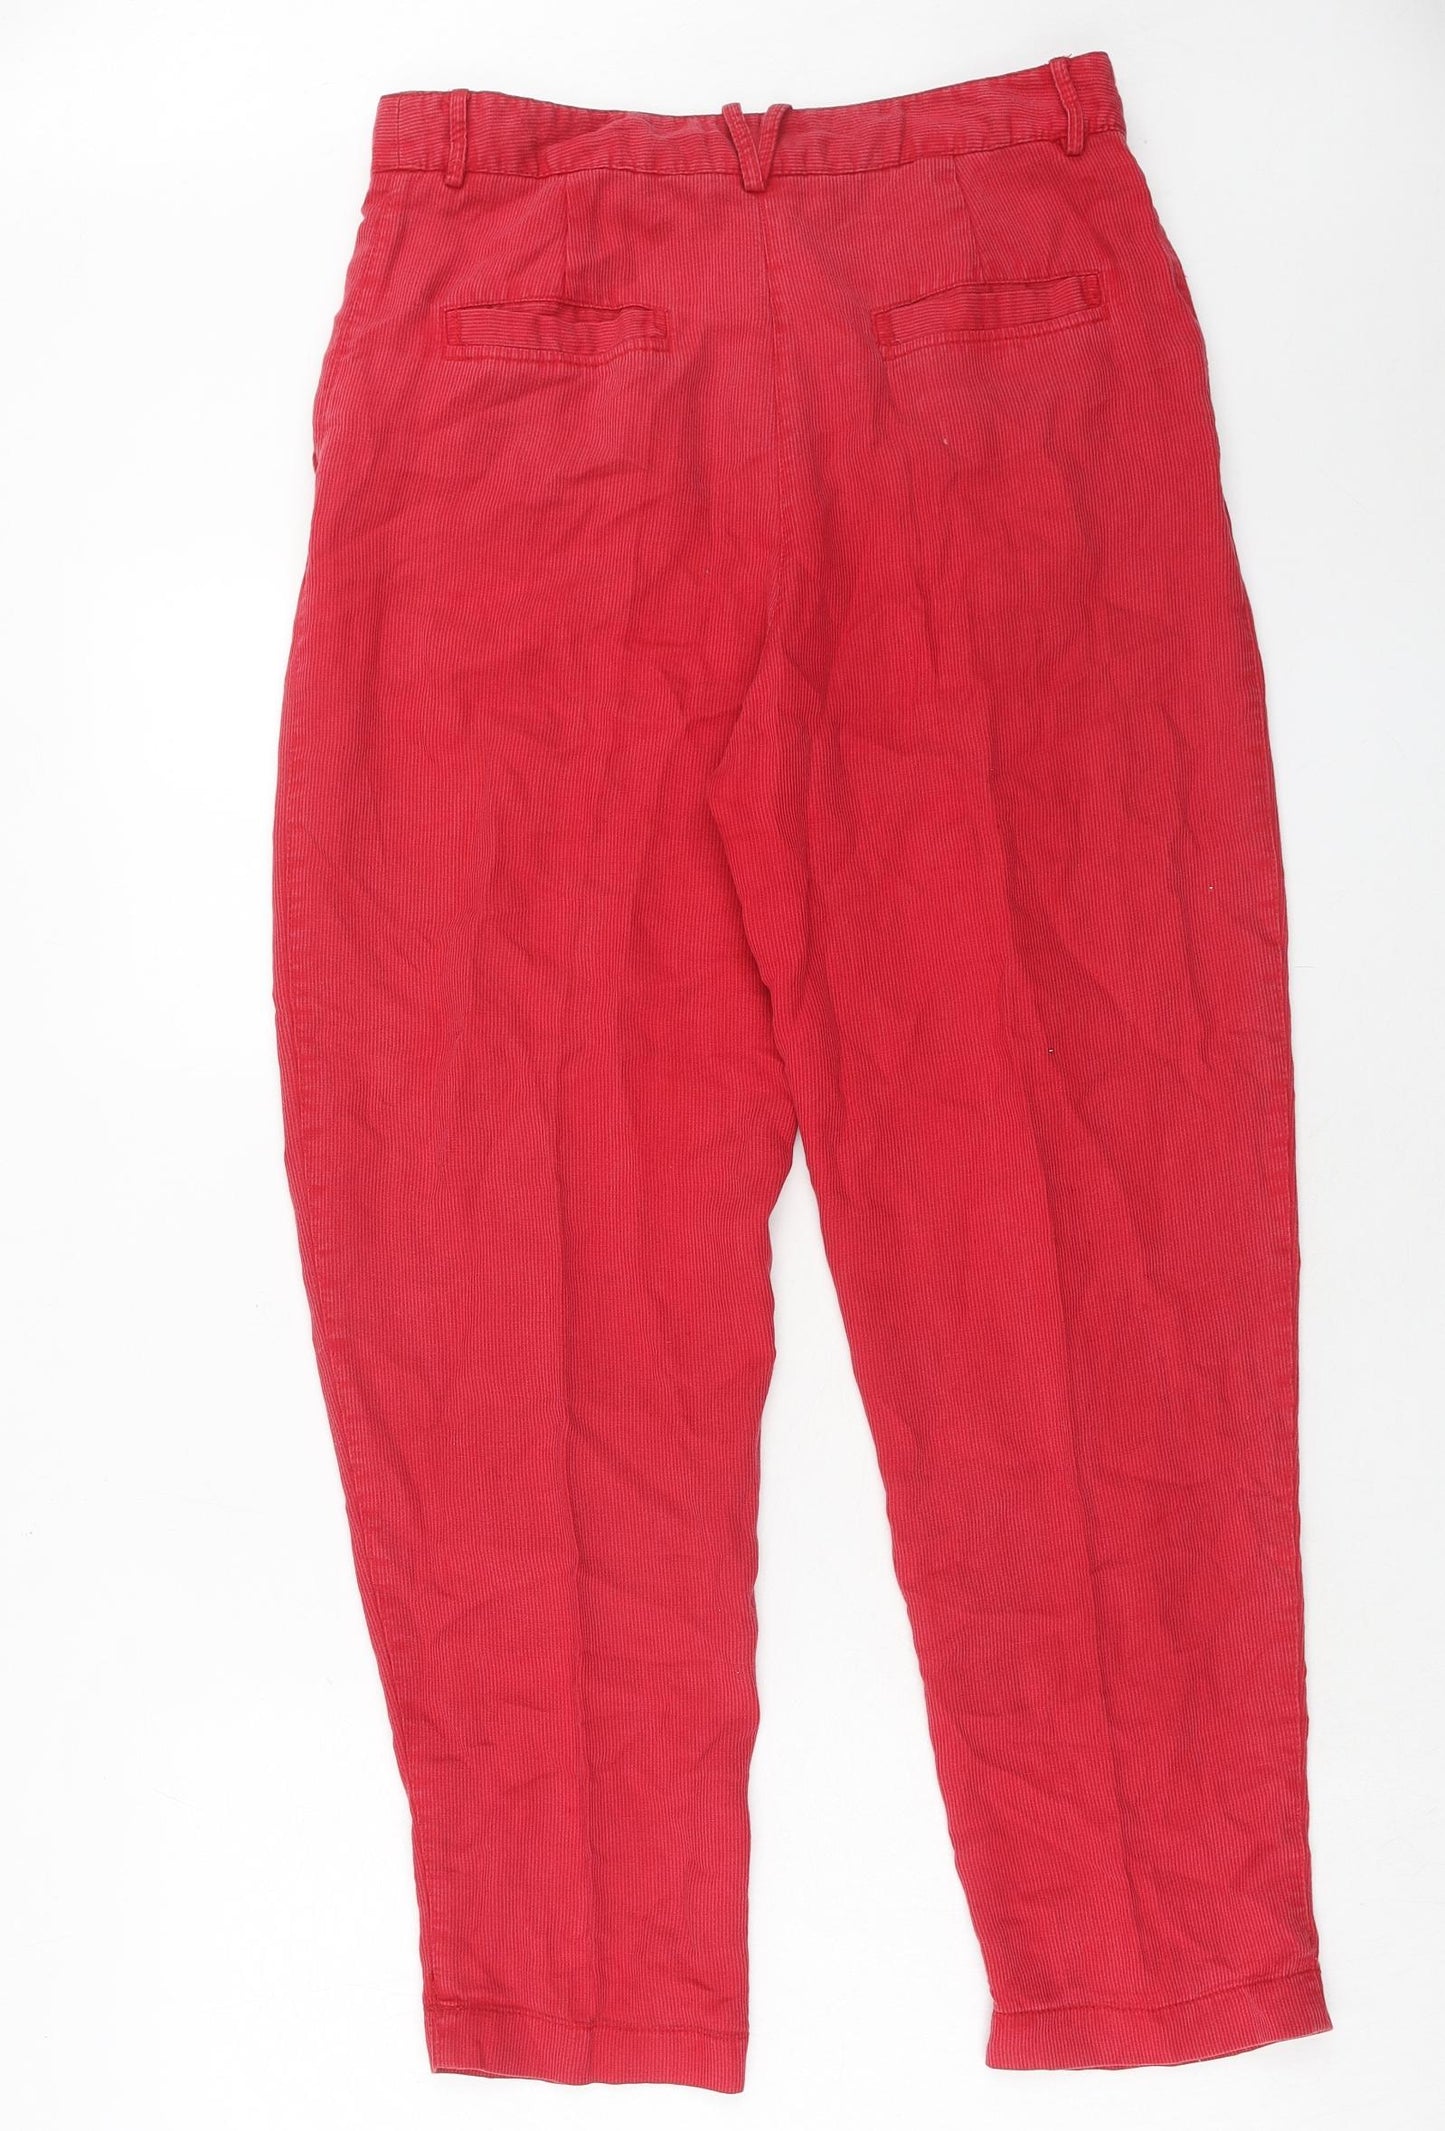 Topshop Womens Red Lyocell Dress Pants Trousers Size 14 Regular Zip